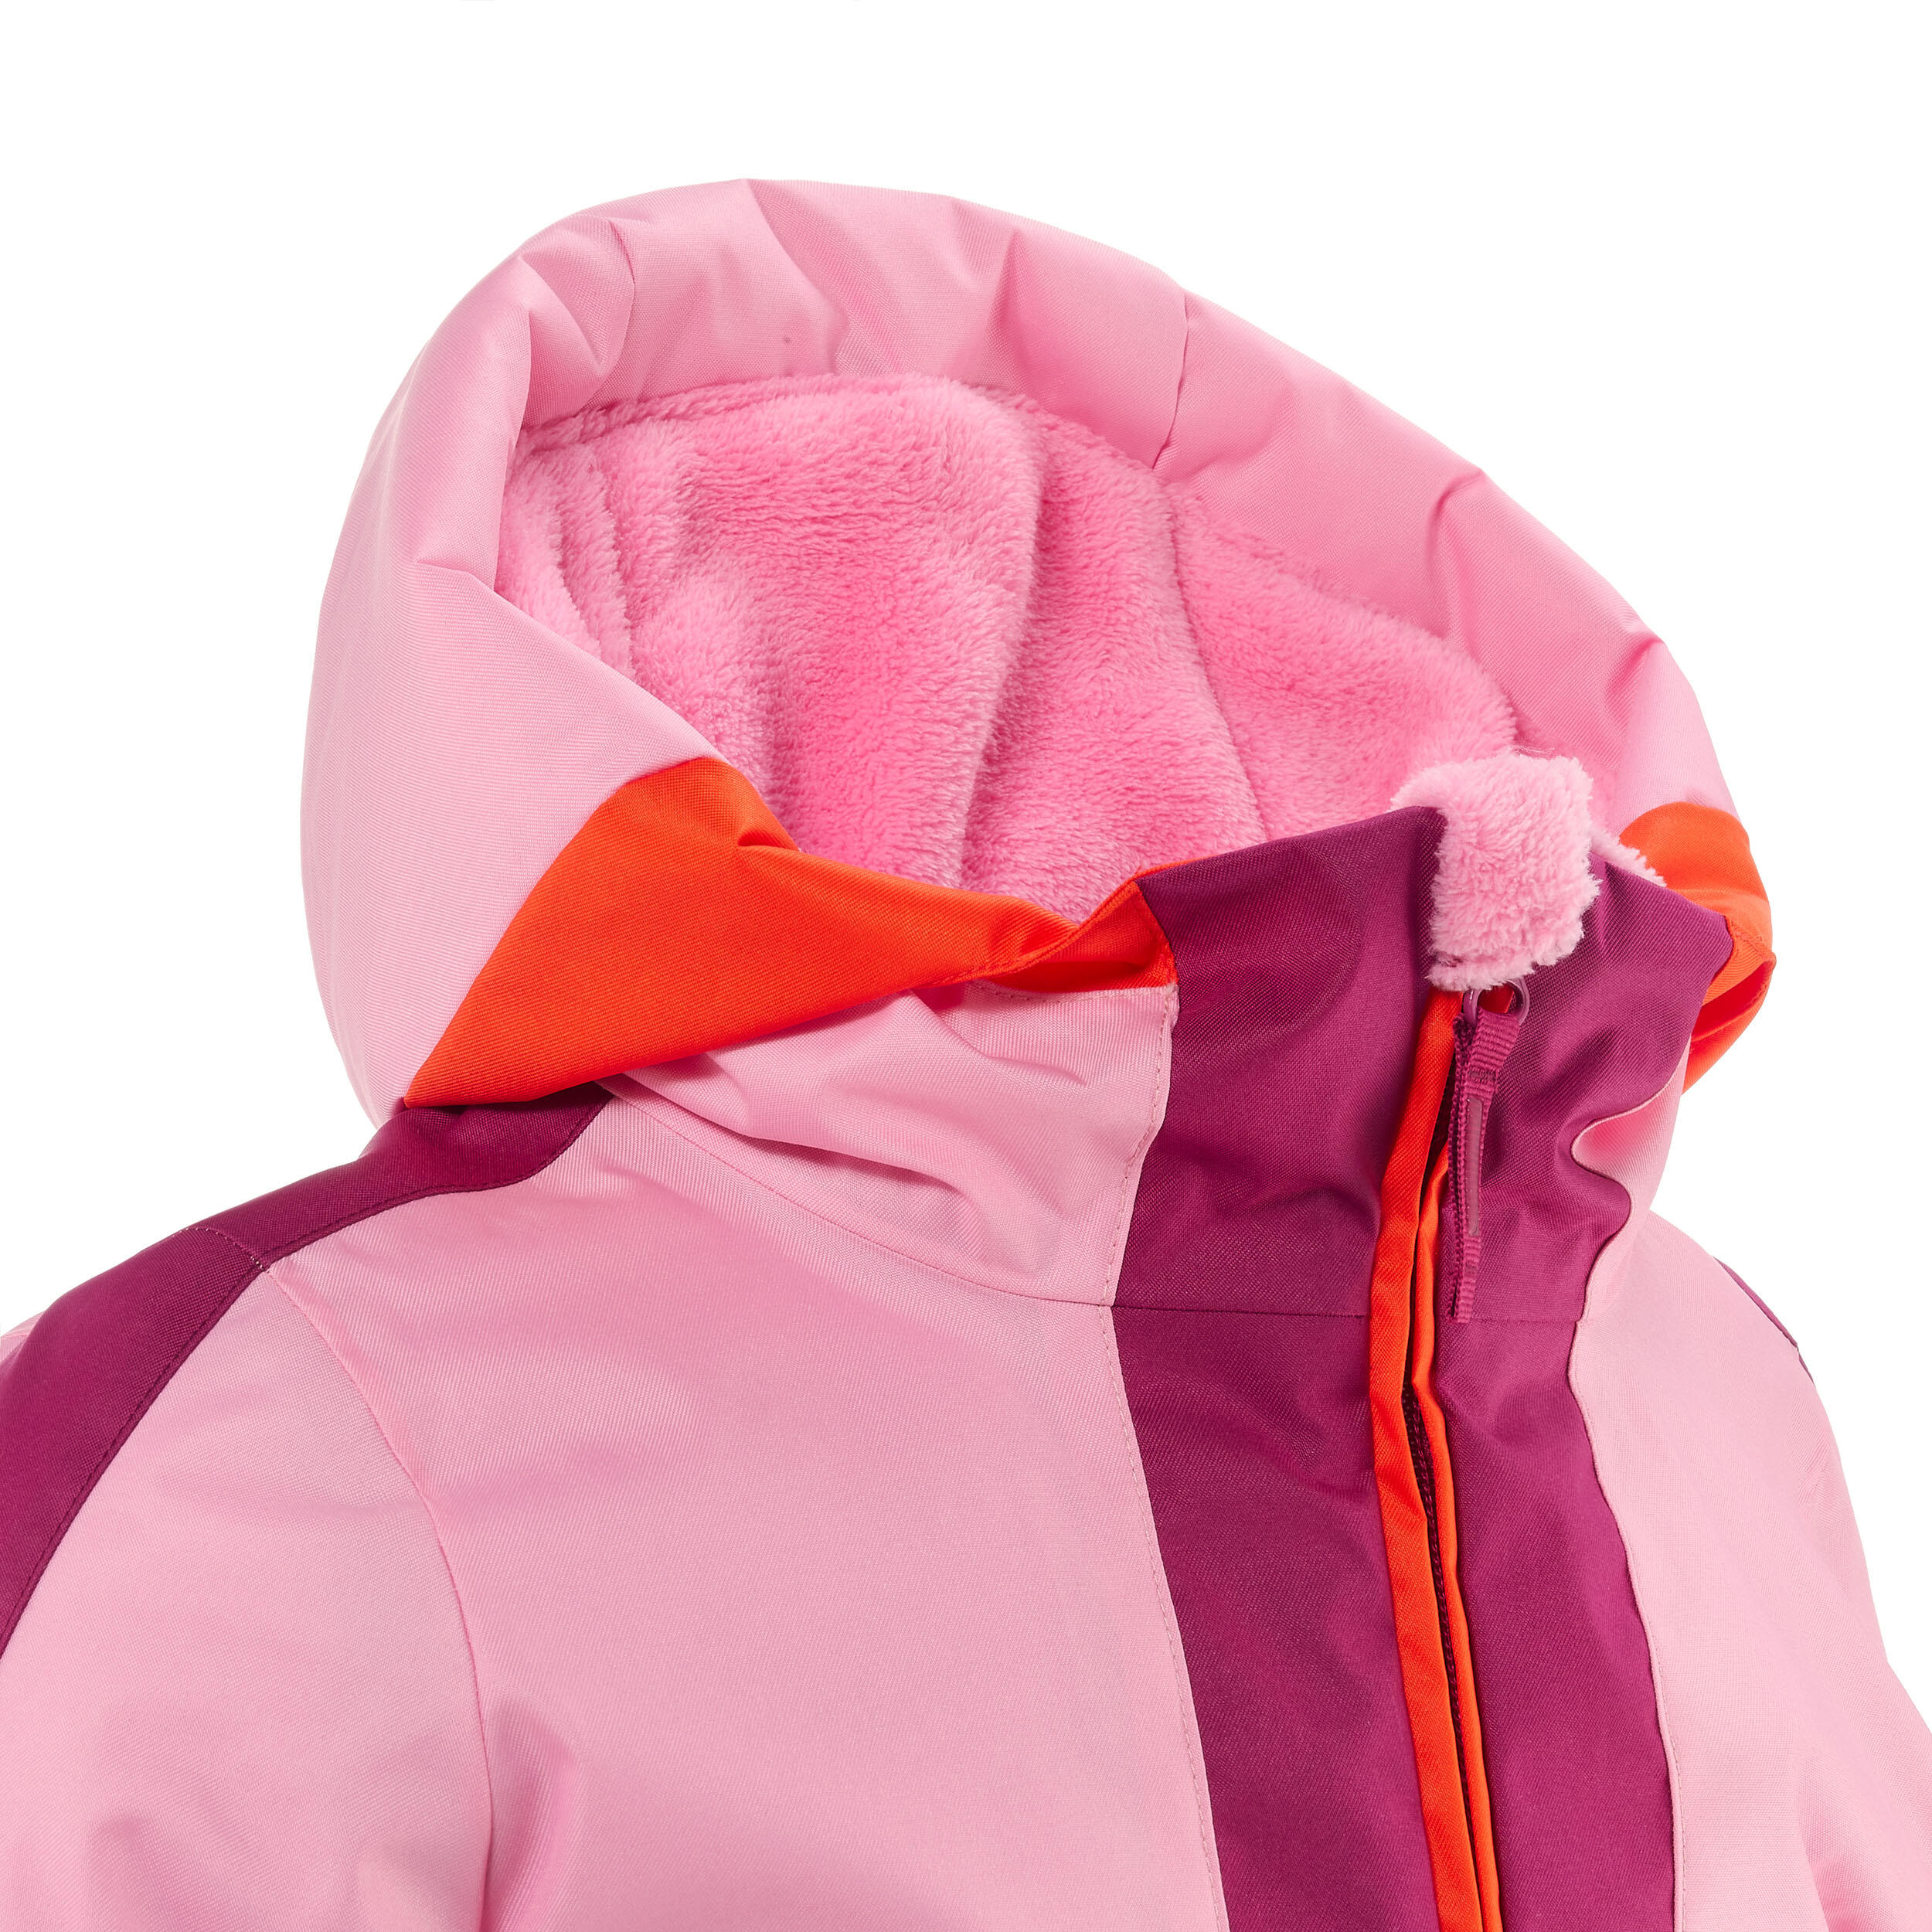 Kids’ Warm and Waterproof Ski Suit 580 - Pink 5/15